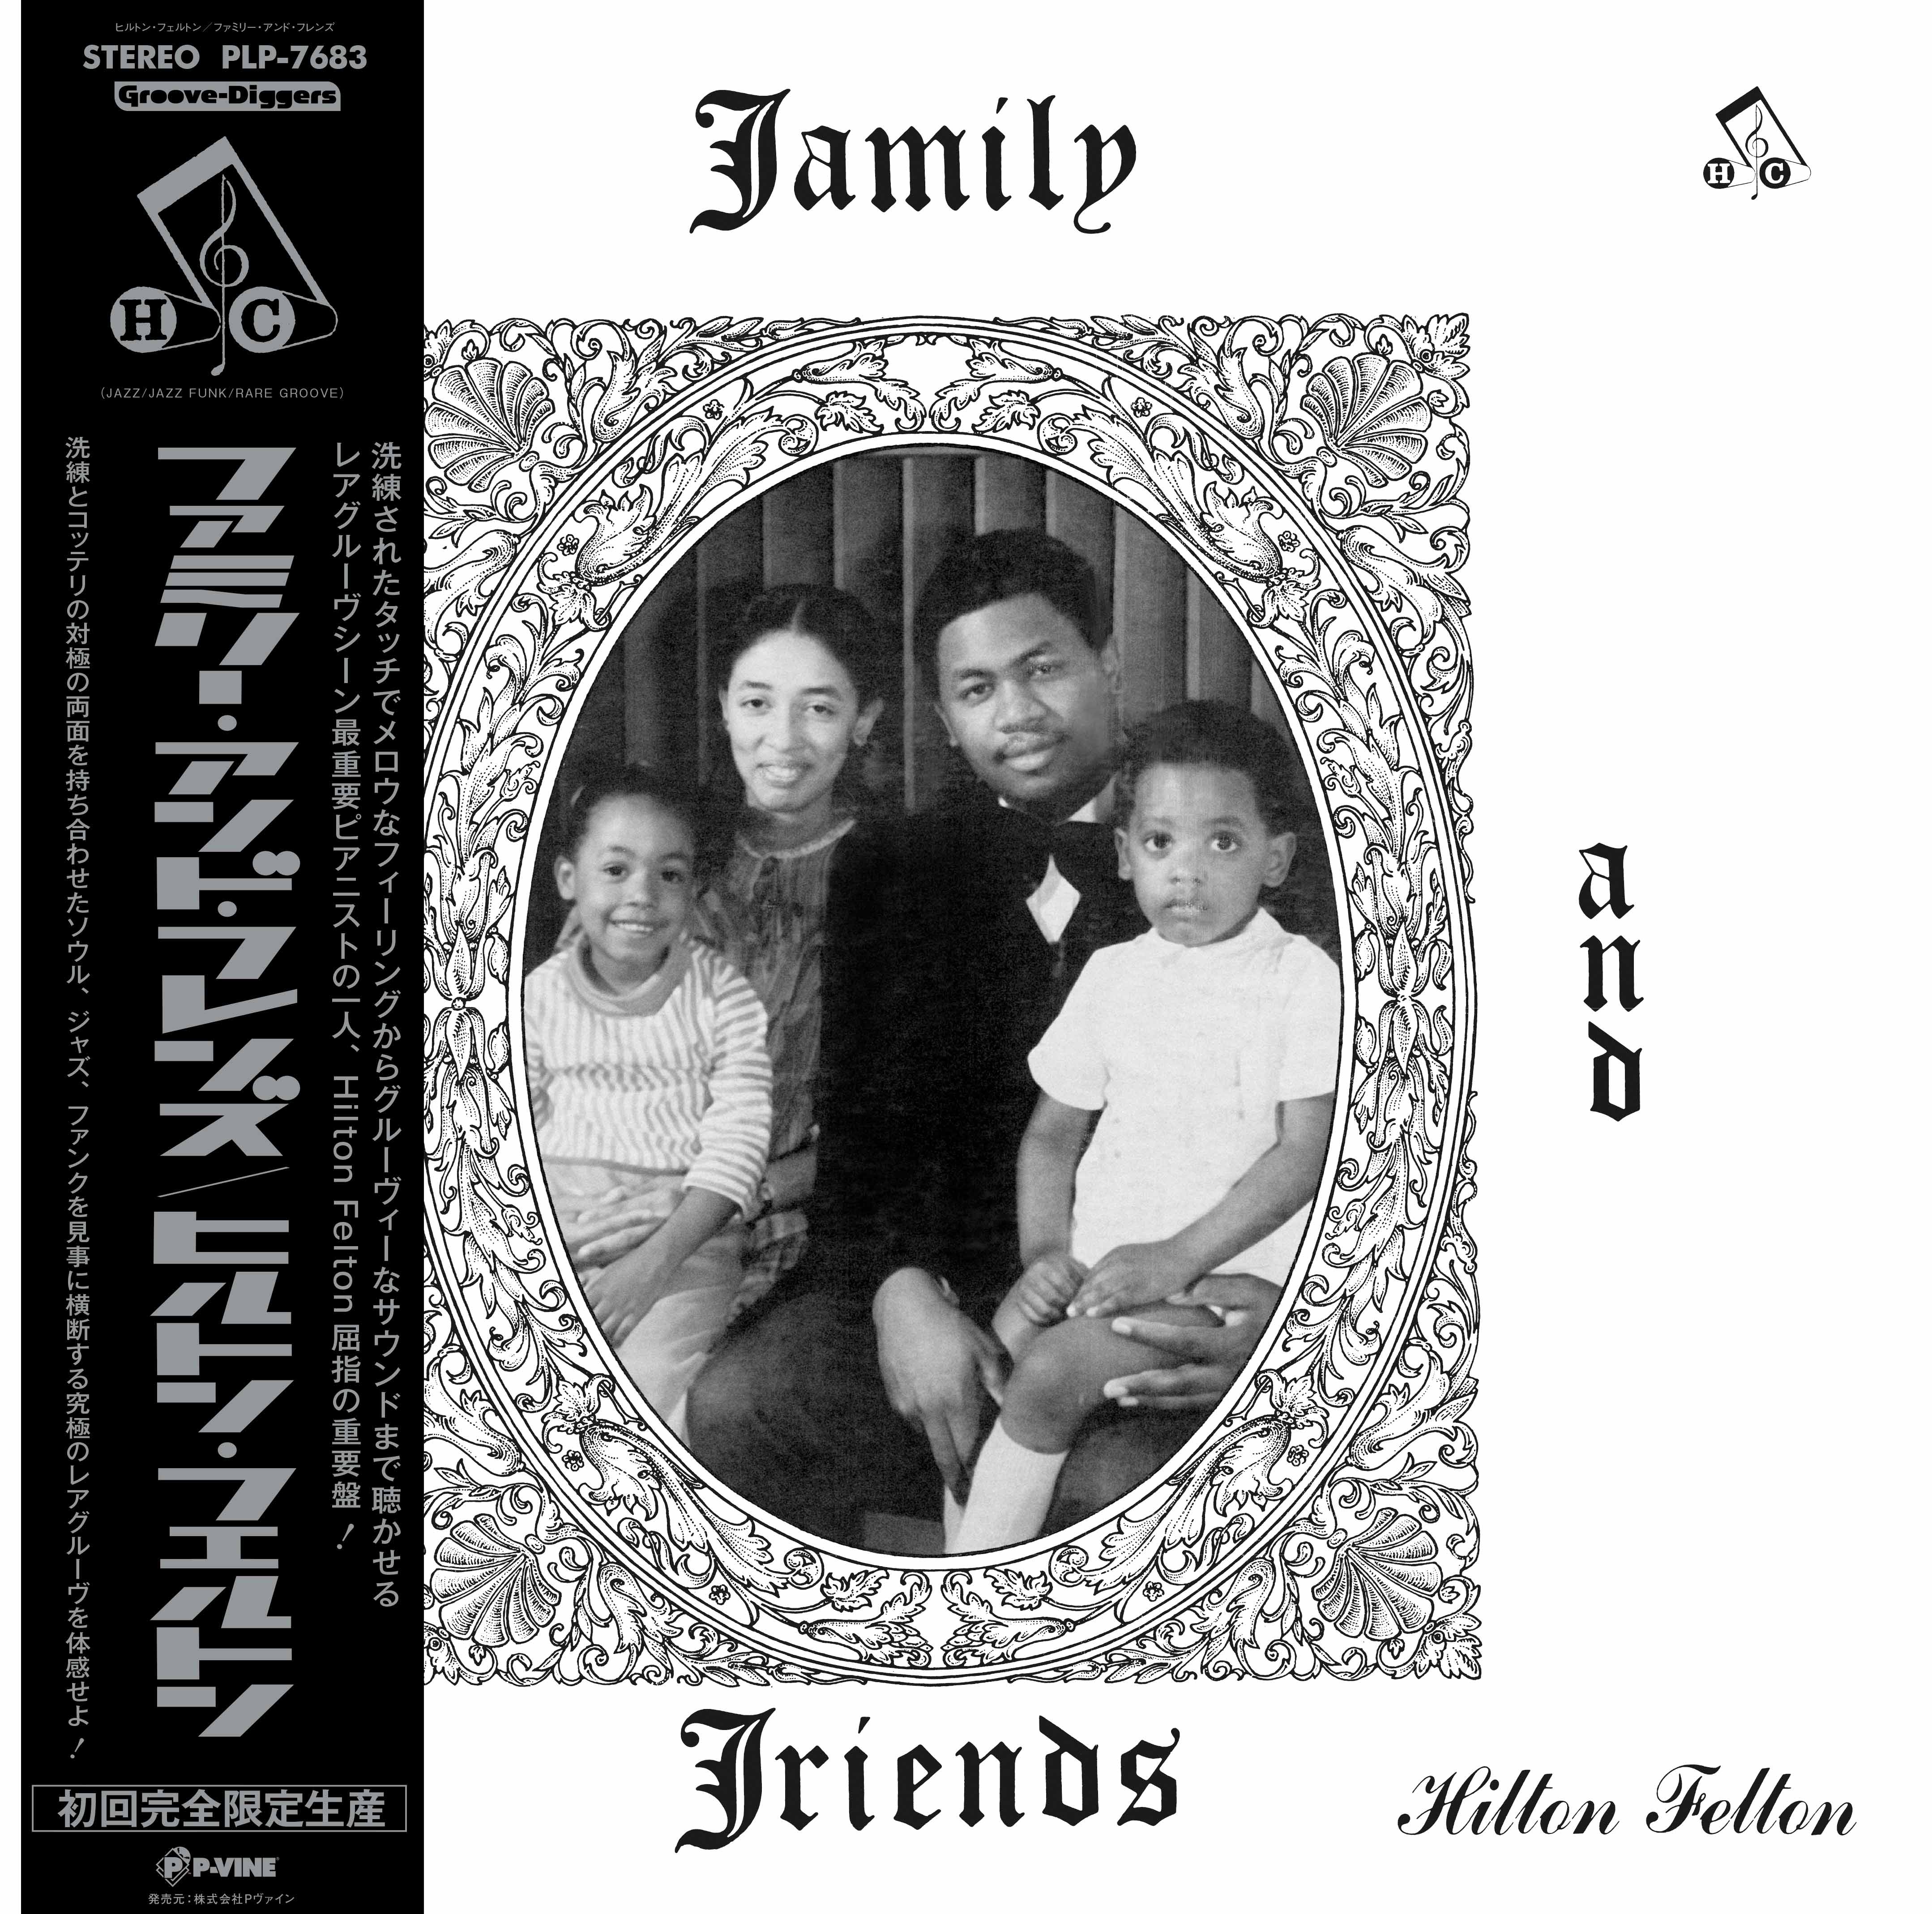 HILTON FELTON「Family And Friends」